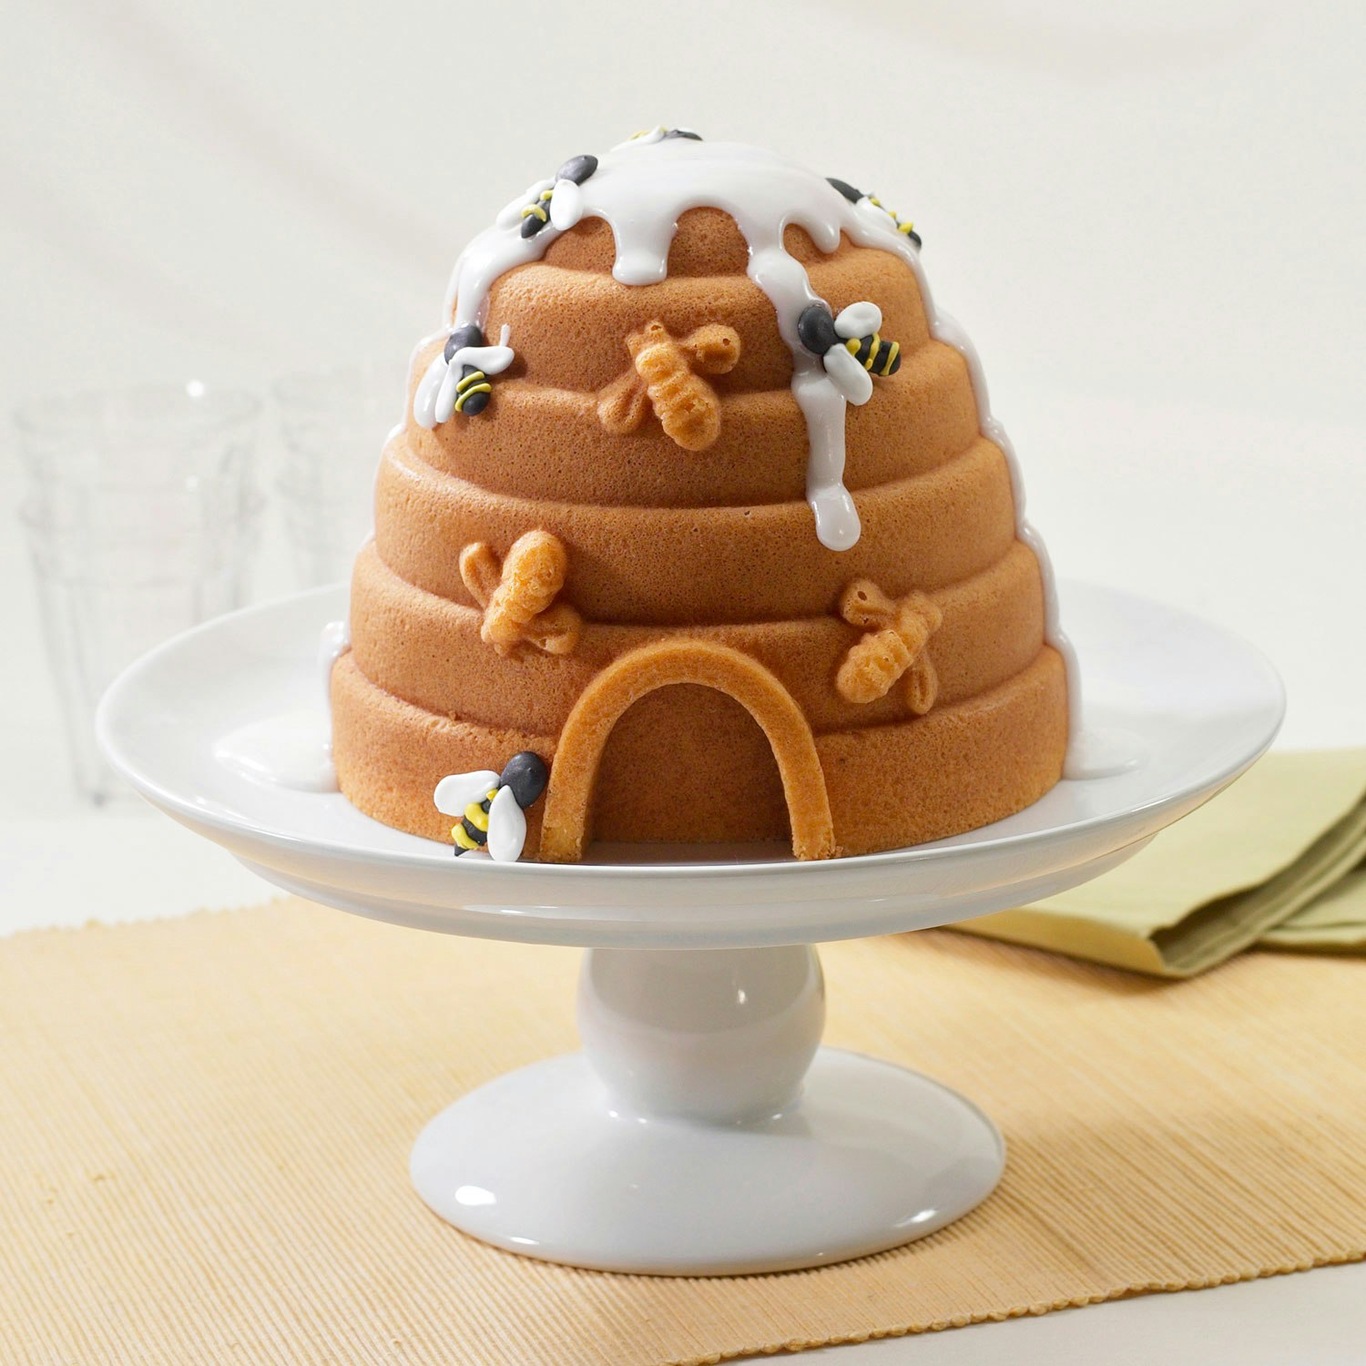 https://royaldesign.com/image/11/nordic-ware-nordic-ware-beehive-cake-bundt-pan-1?w=800&quality=80